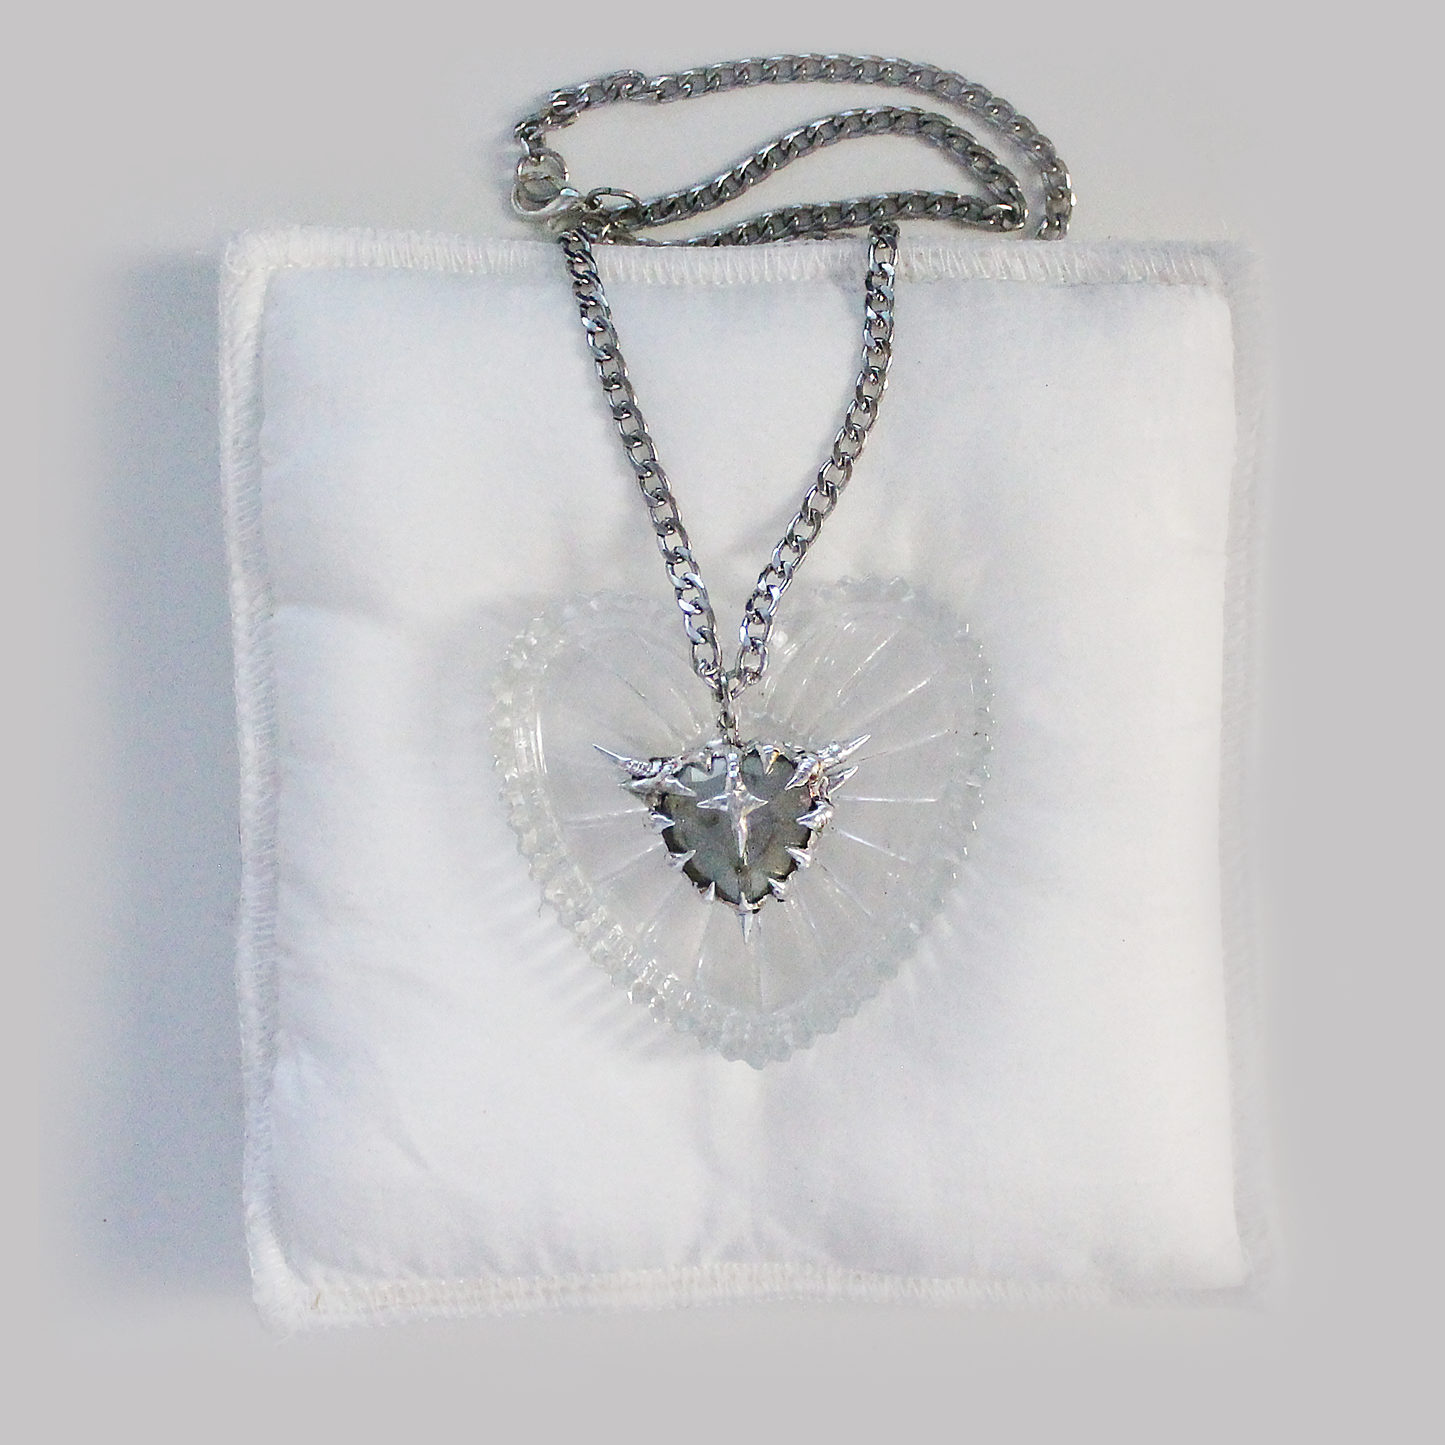 Angelic 𓆩♡𓆪 Heart - soldered pendant necklace